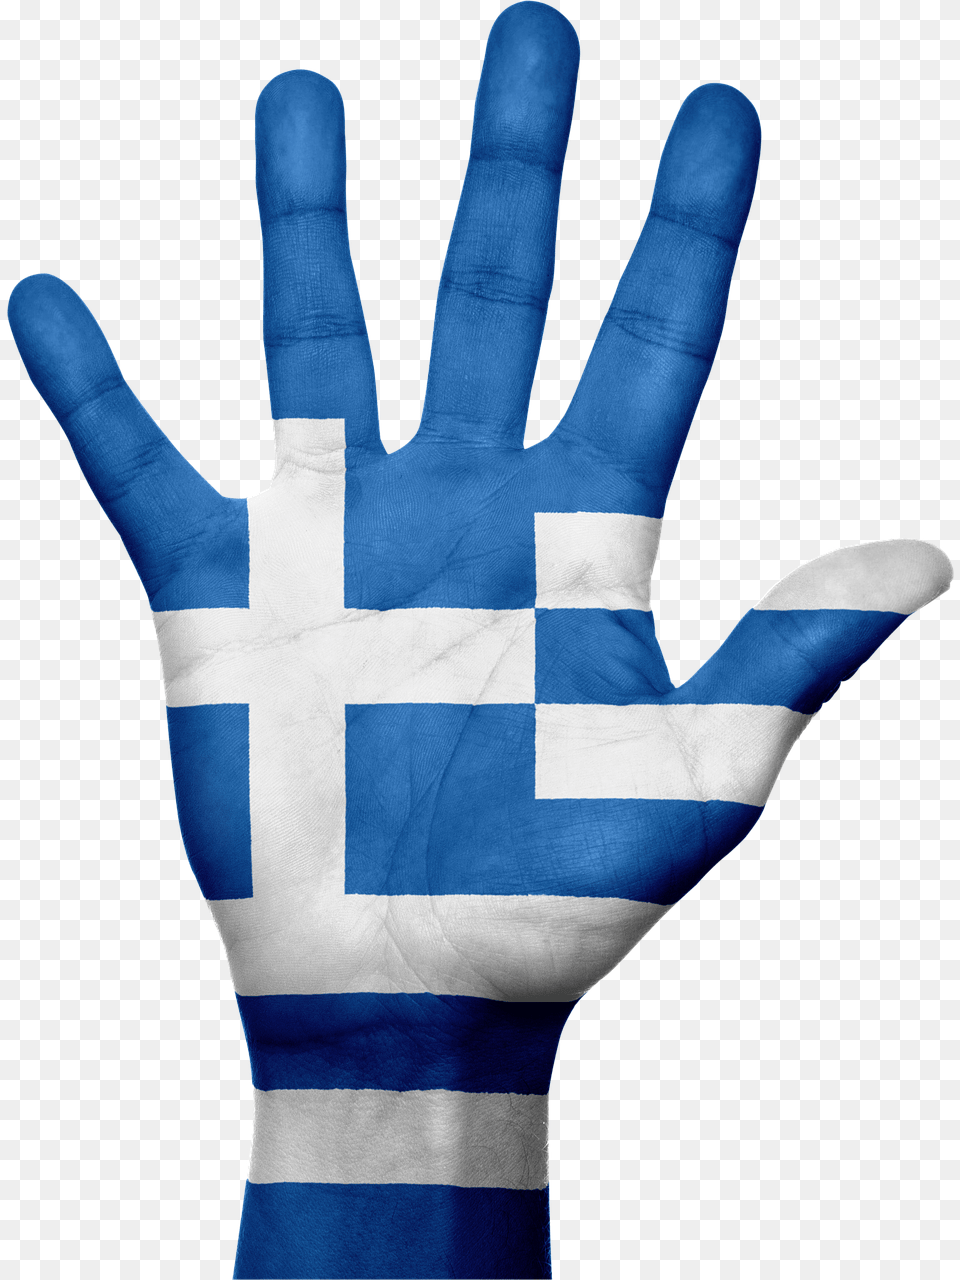 Greek Flag On A Hand, Clothing, Glove, Baseball, Baseball Glove Png Image